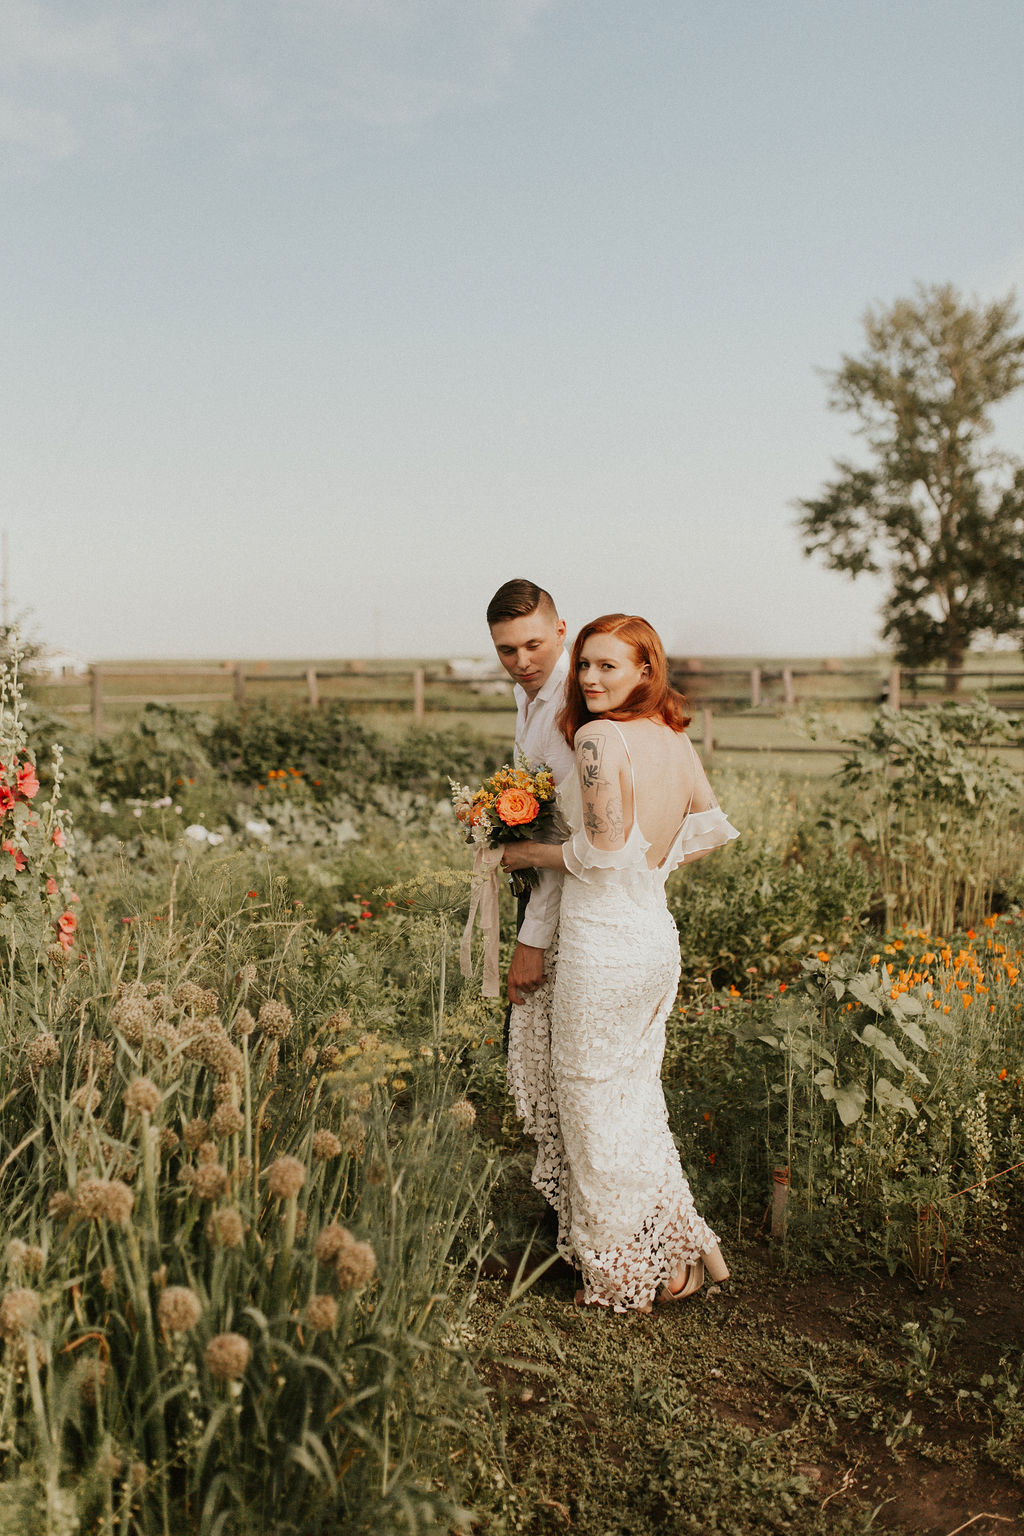 Bride and groom walk together through a flower garden at The Gathered, a wedding venue near Calgary Alberta